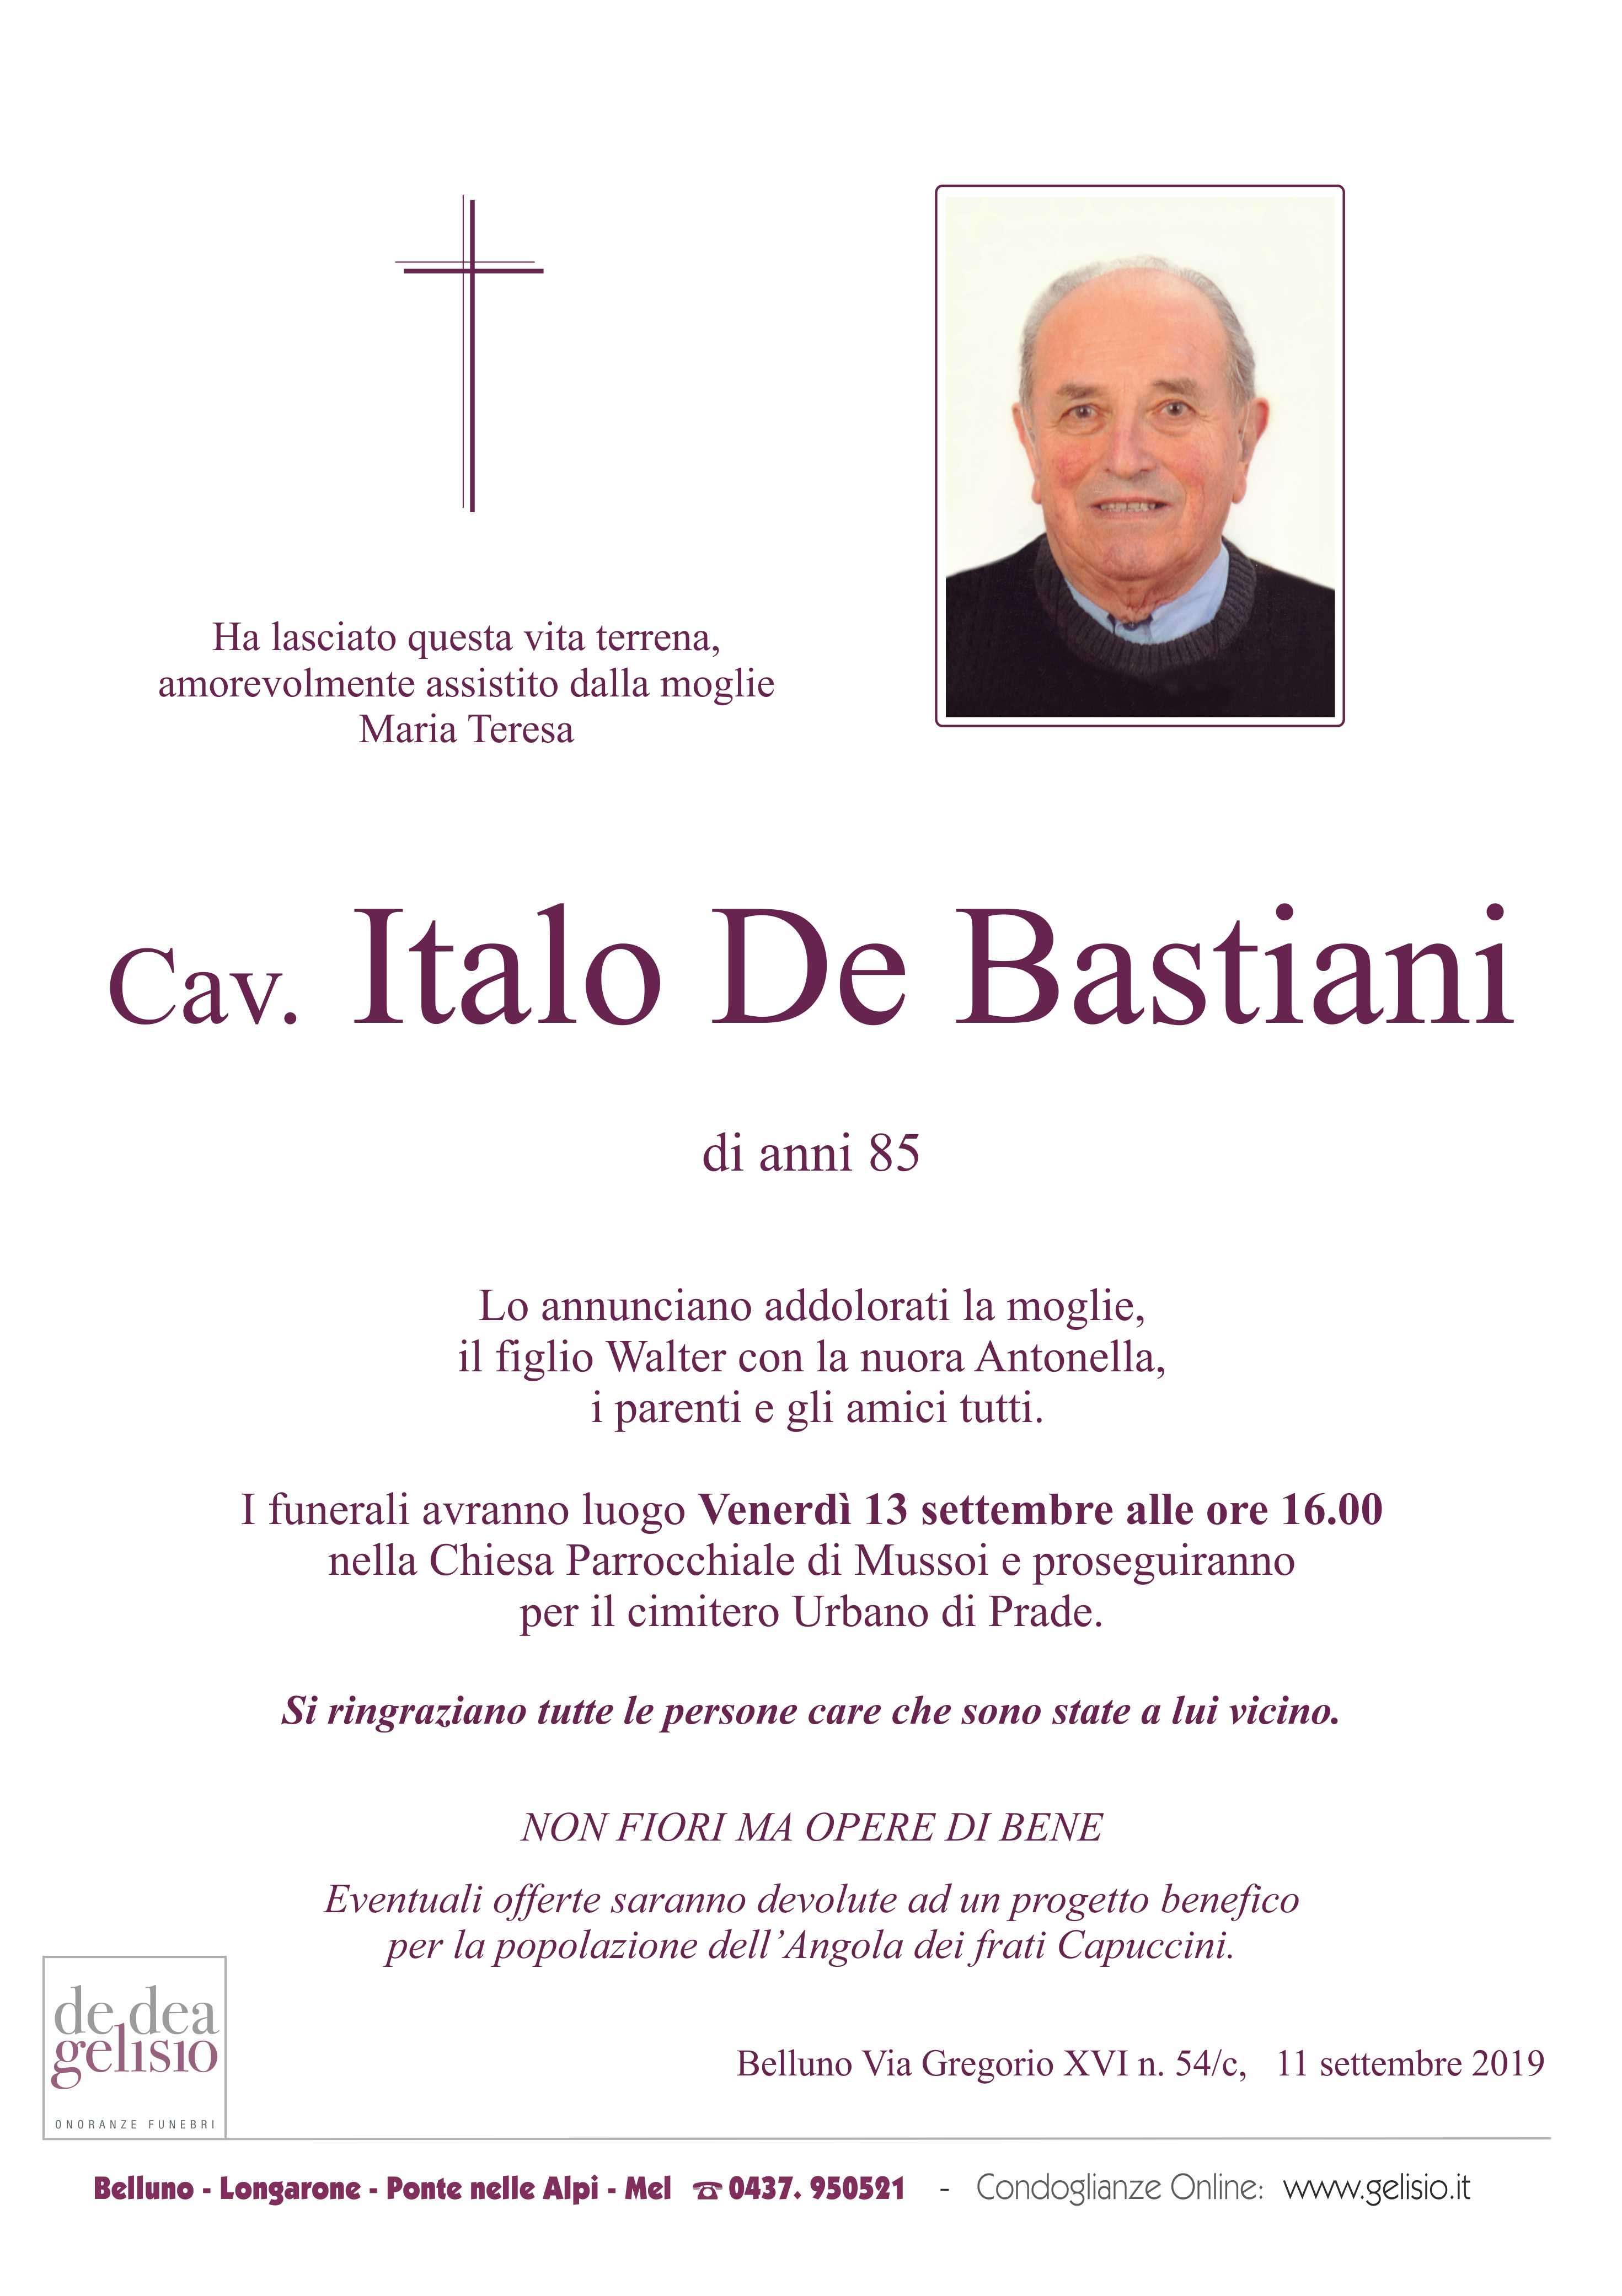 De Bastiani Italo